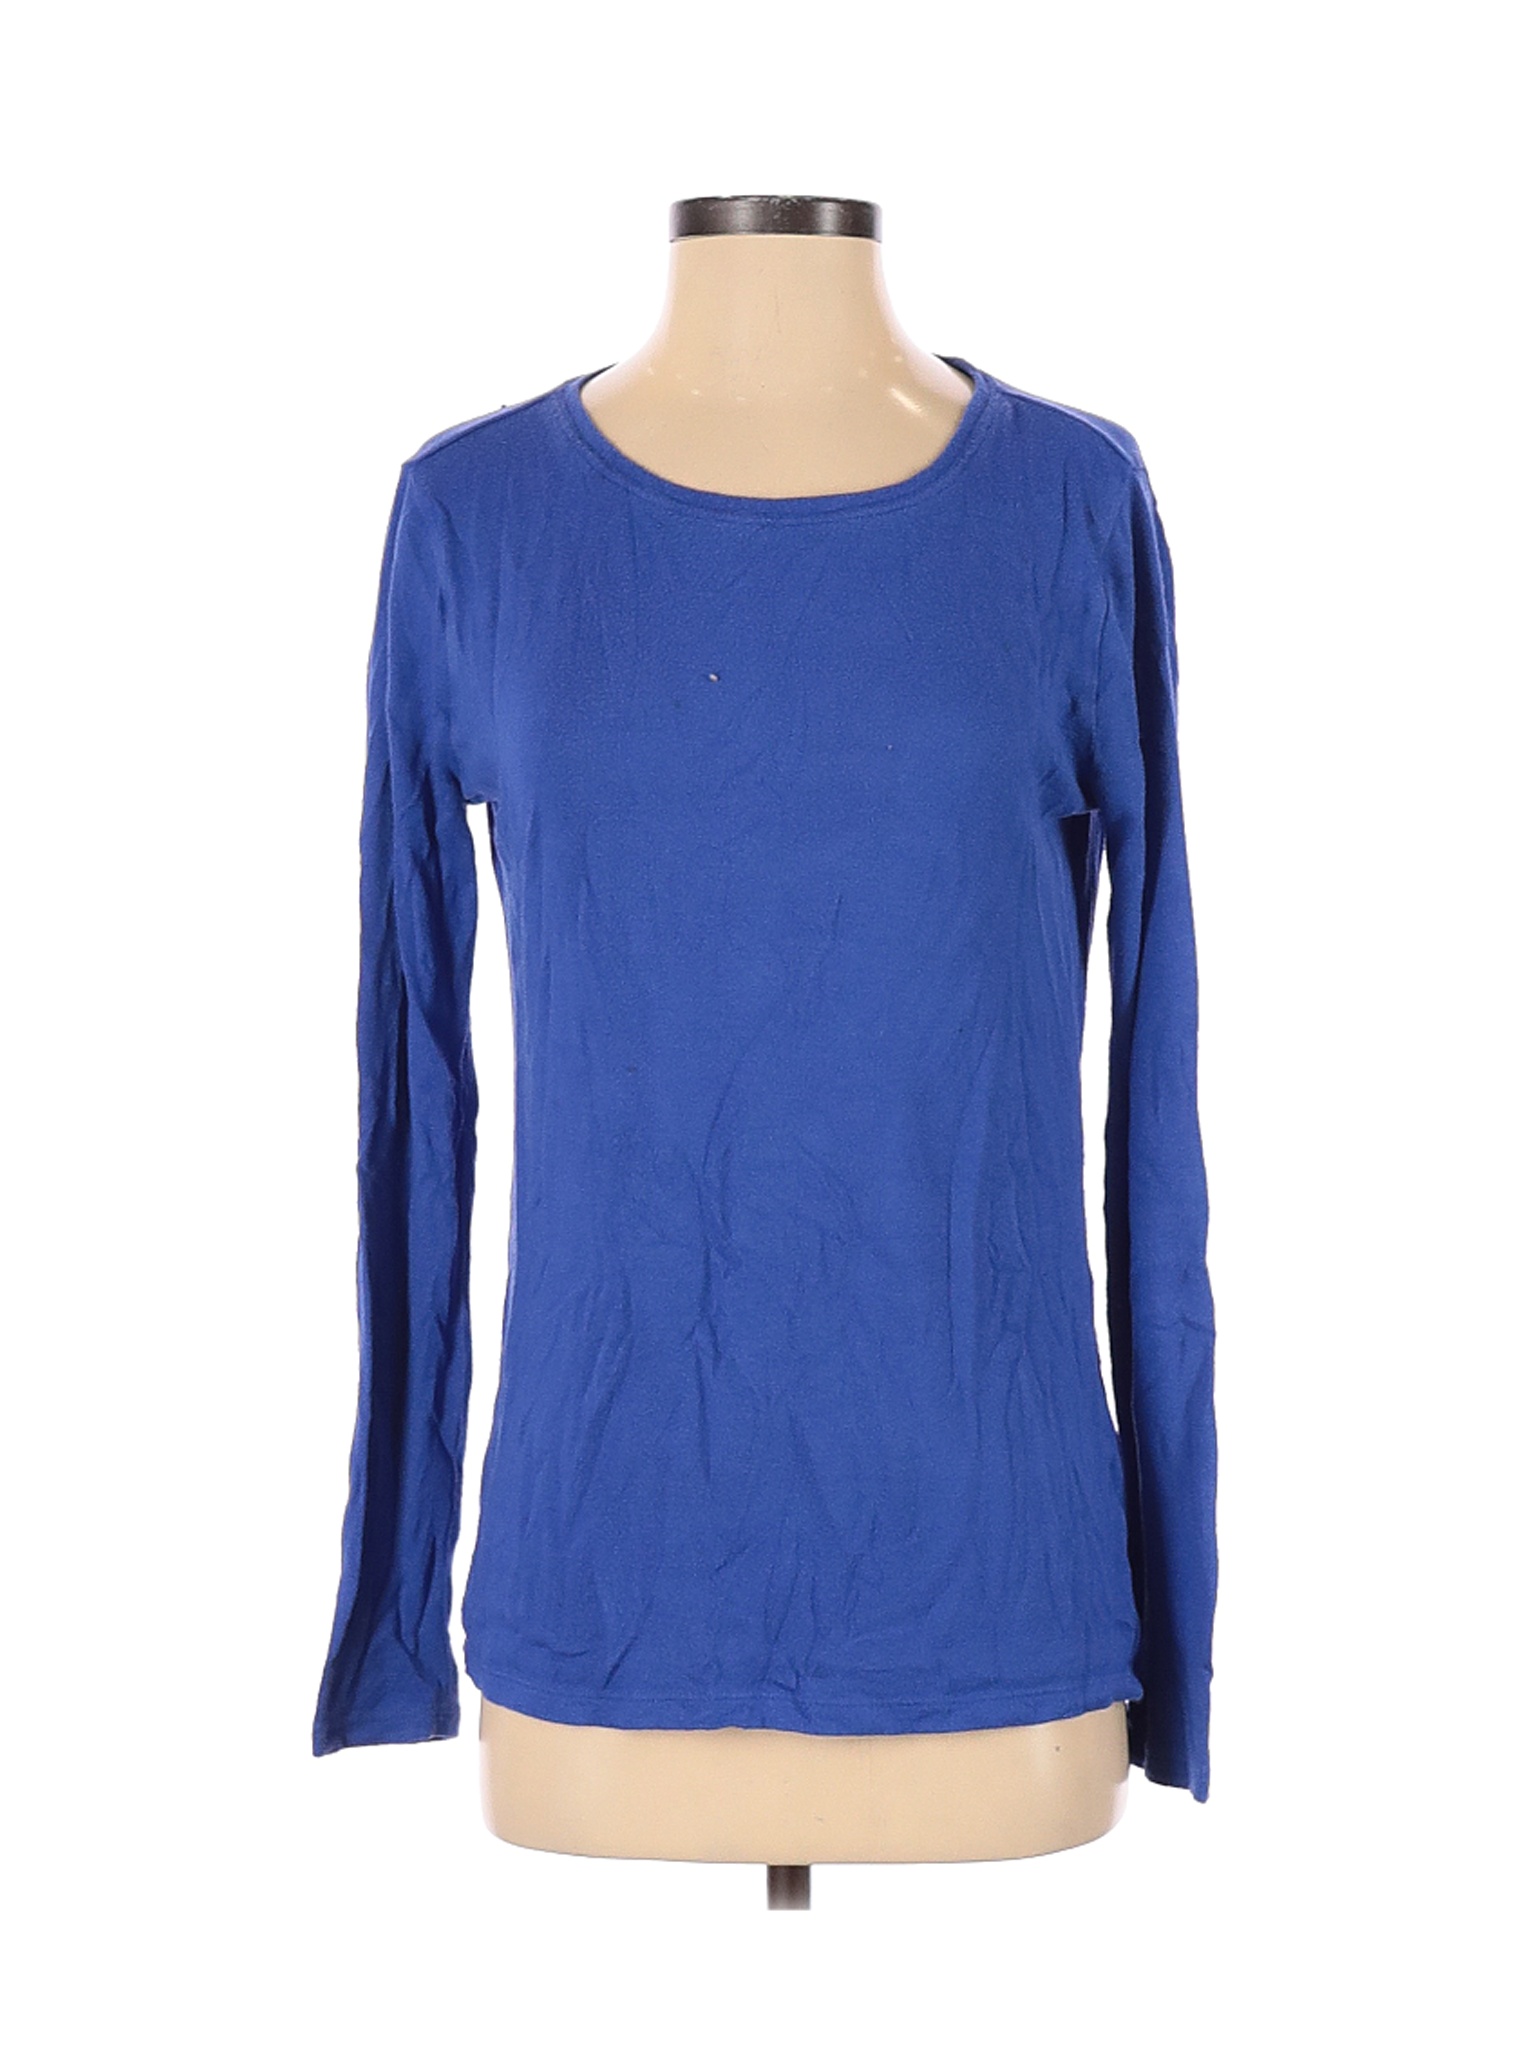 J.Crew Women Blue Pullover Sweater S | eBay